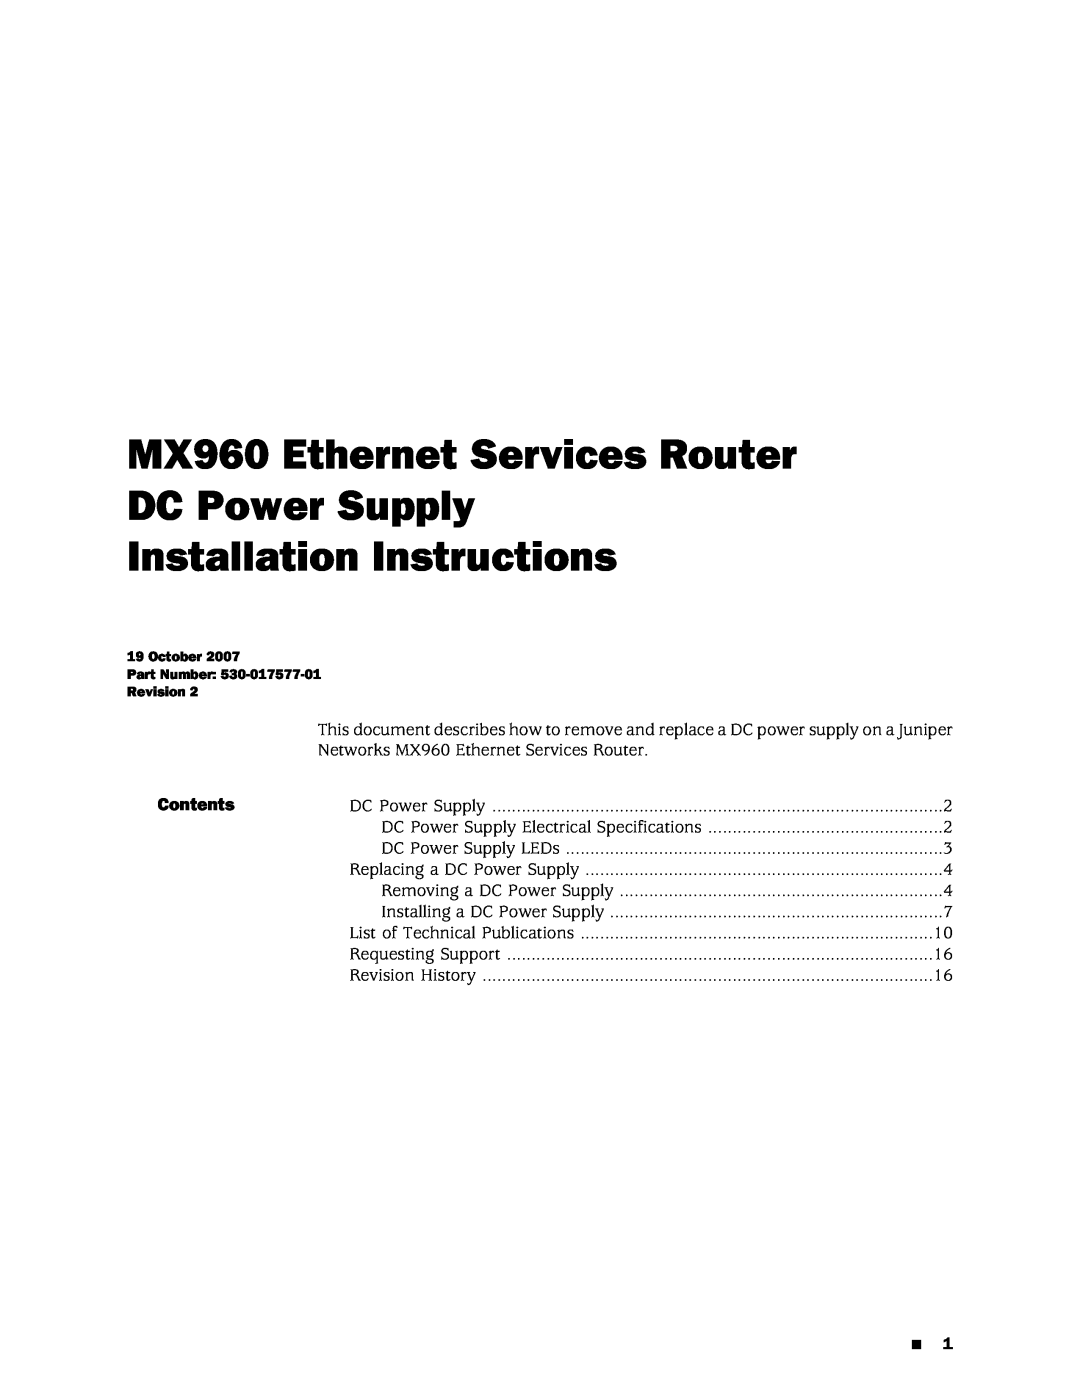 Juniper Networks MX960 manual Product Description, Architecture and Key Components, Datasheet 